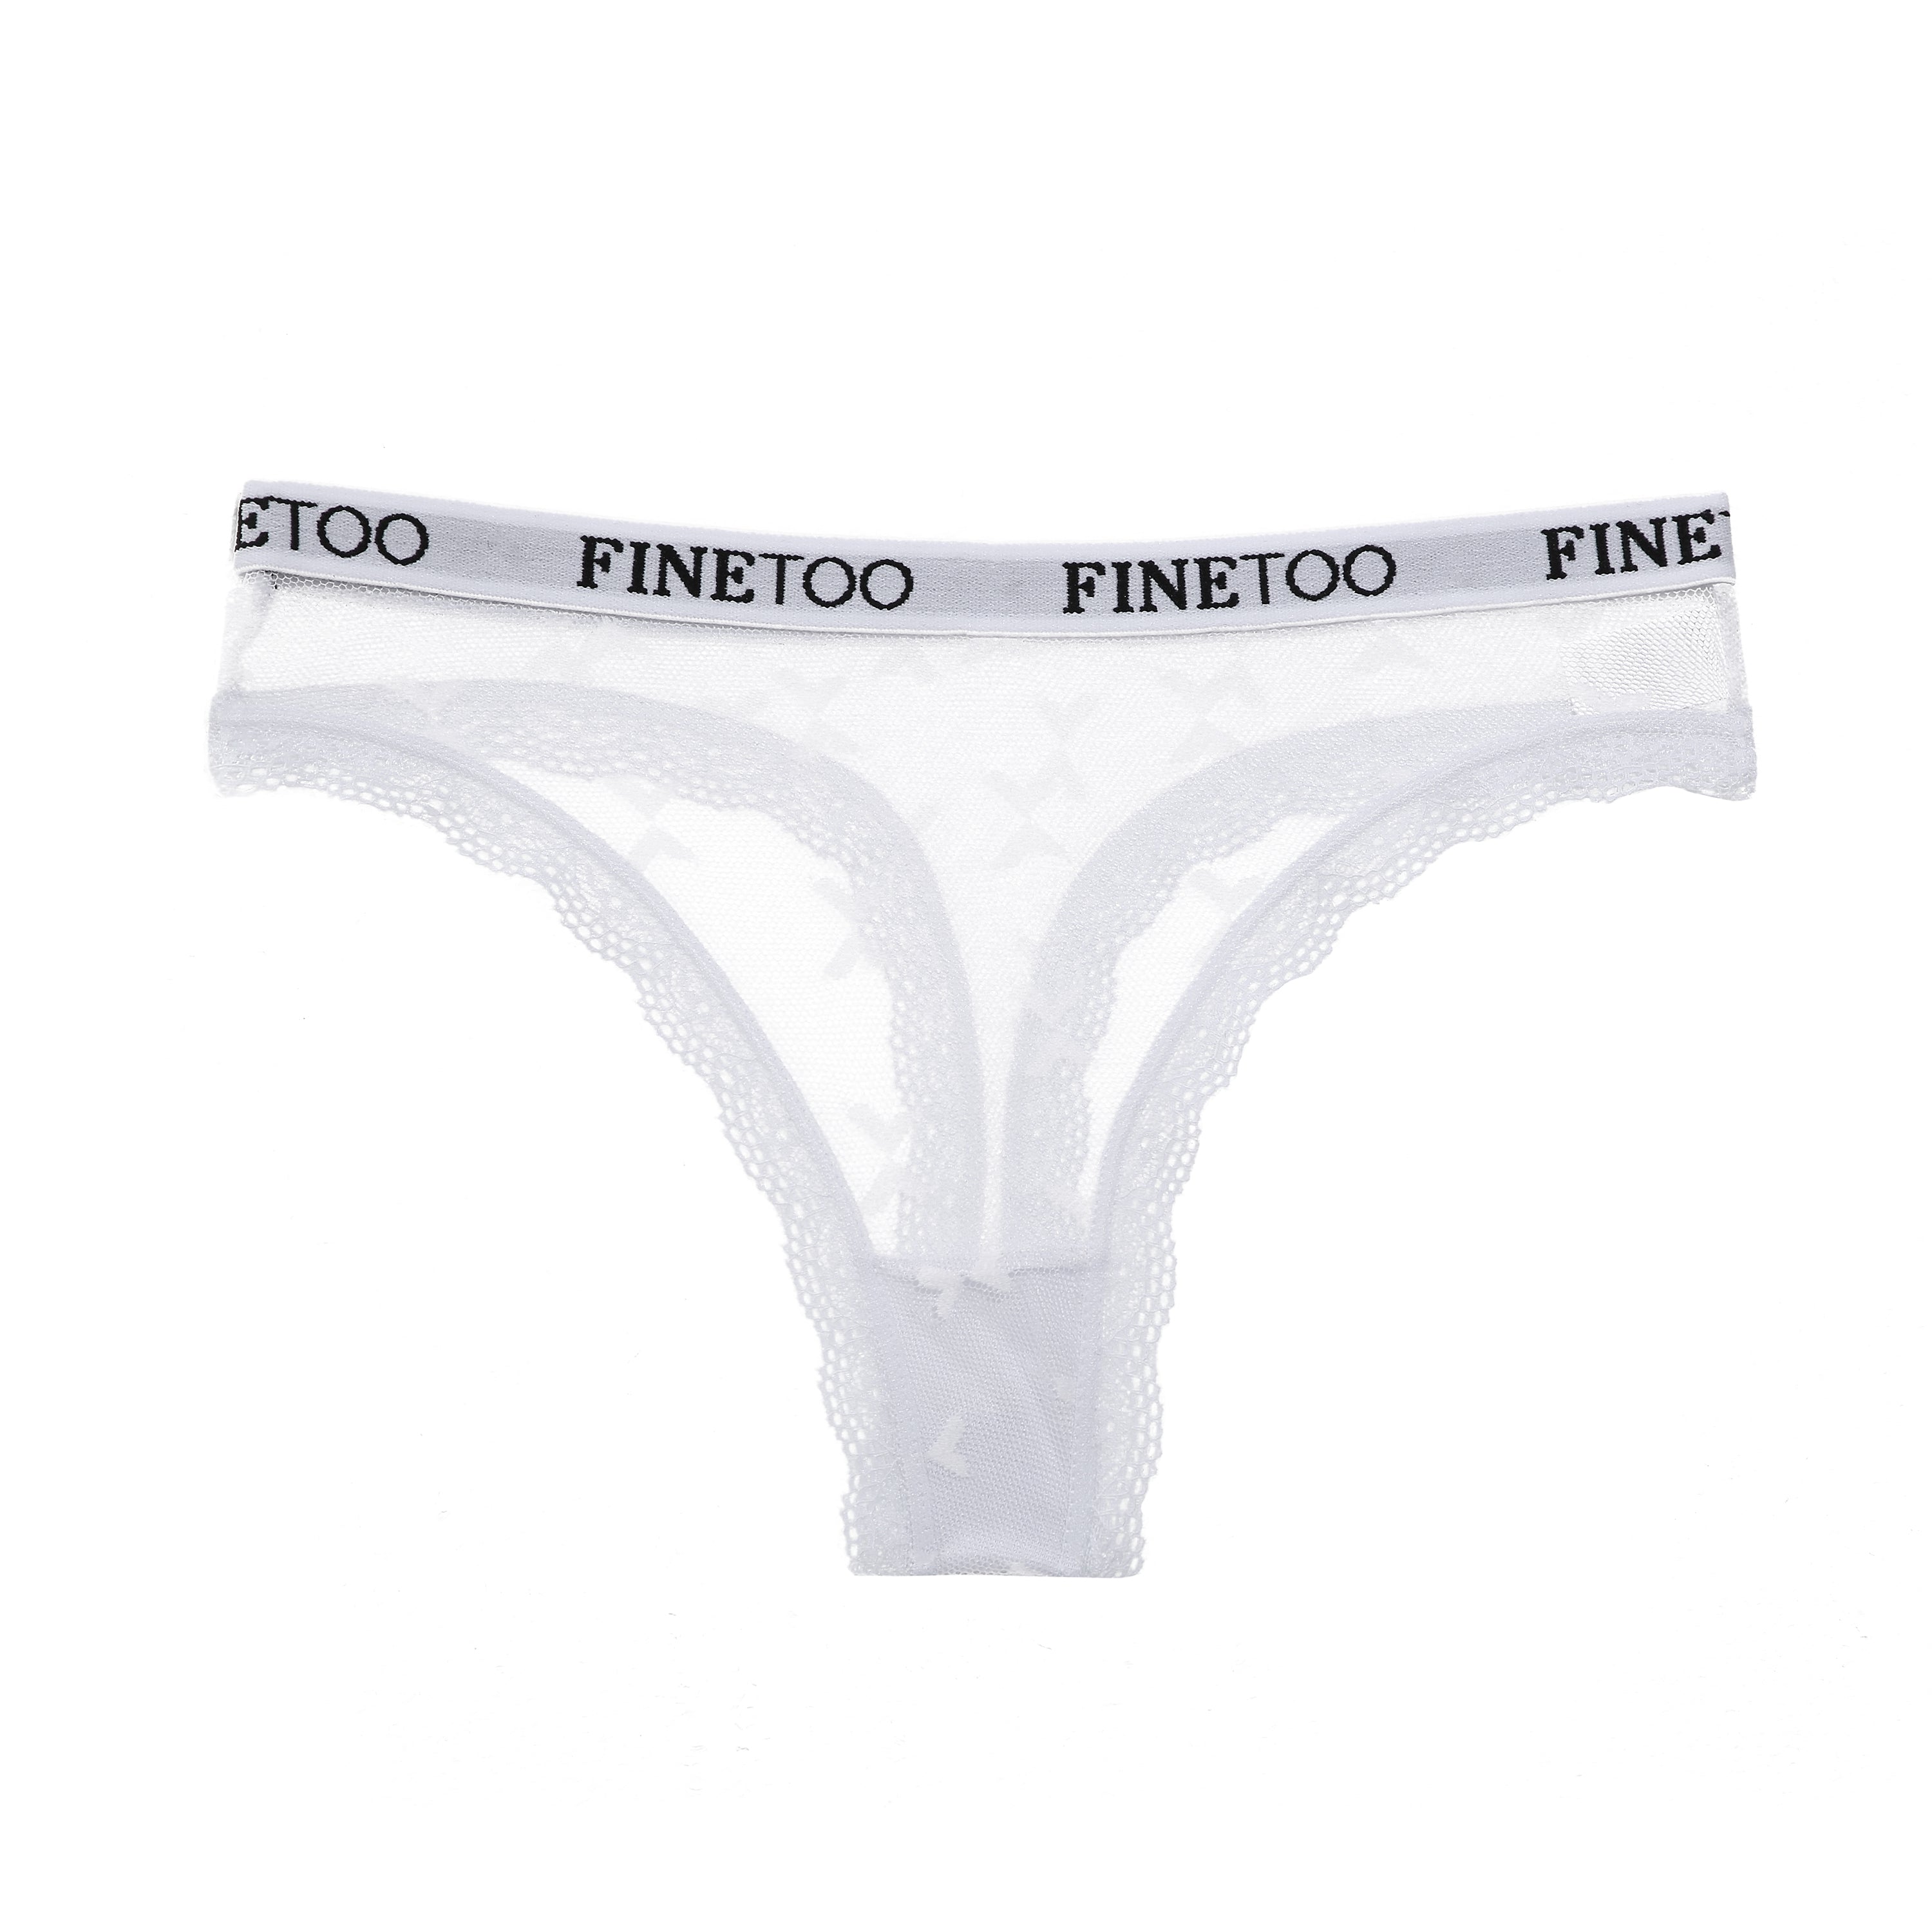 FINETOO Women's Cotton Thongs